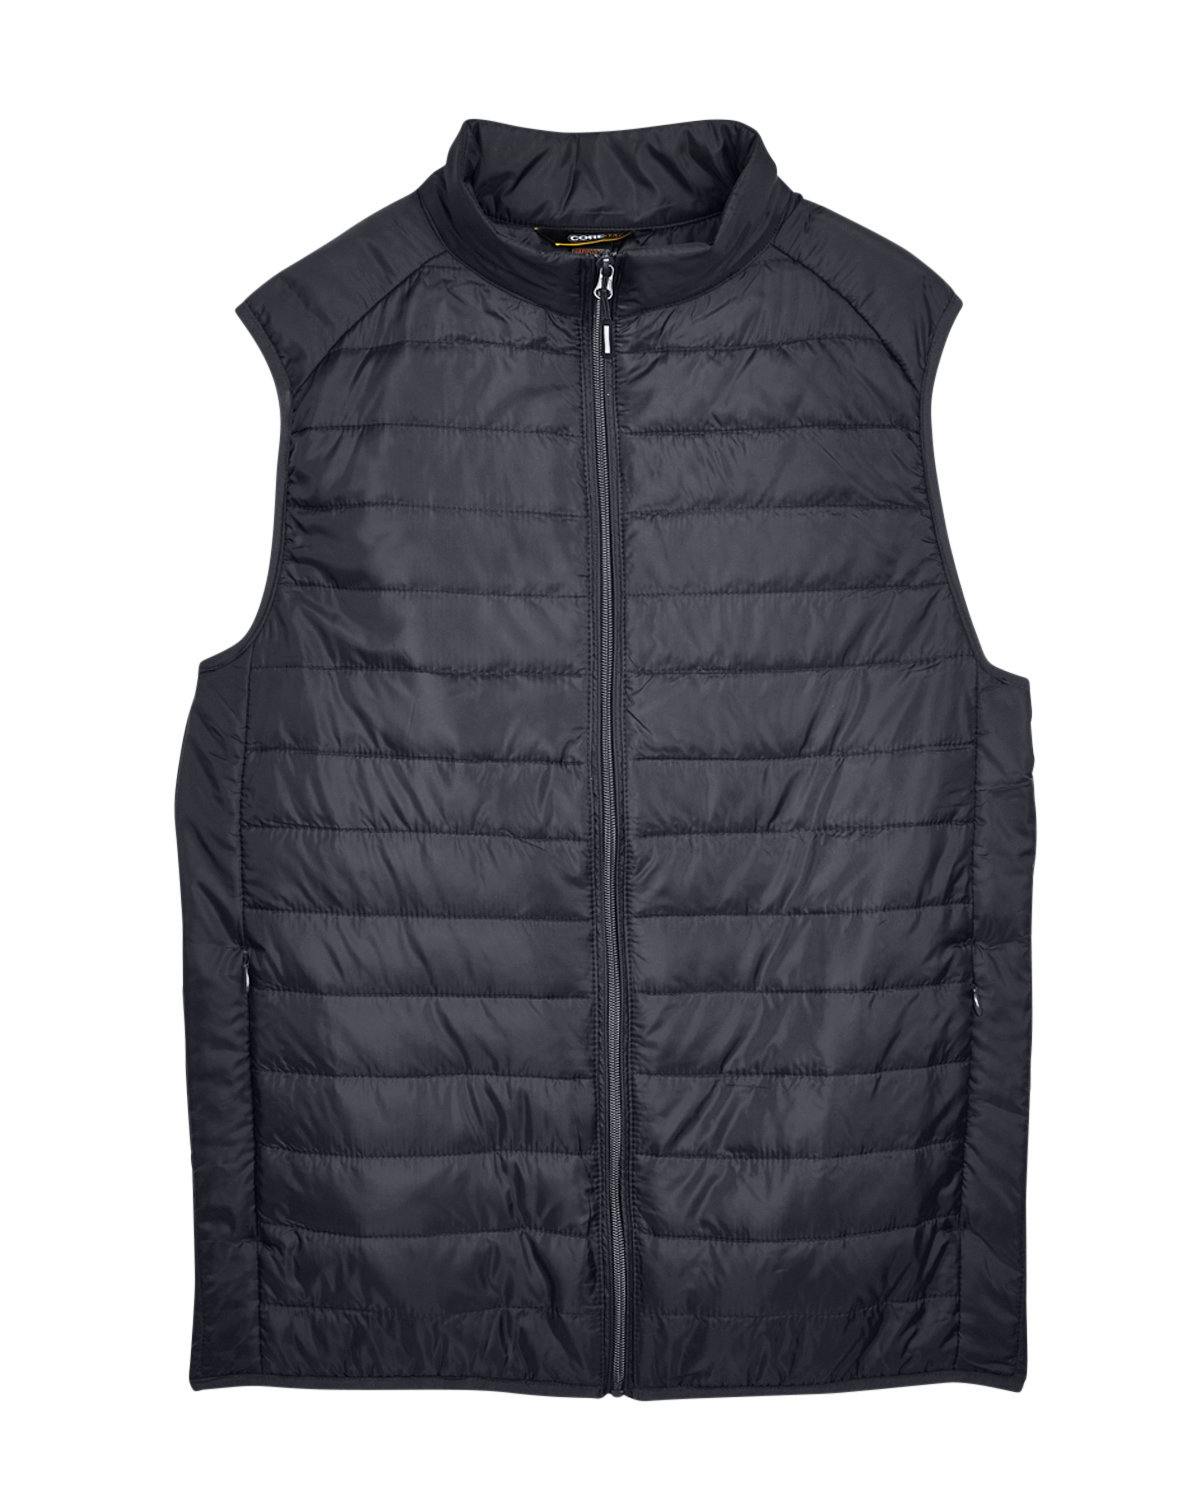 Image for Men's Prevail Packable Puffer Vest